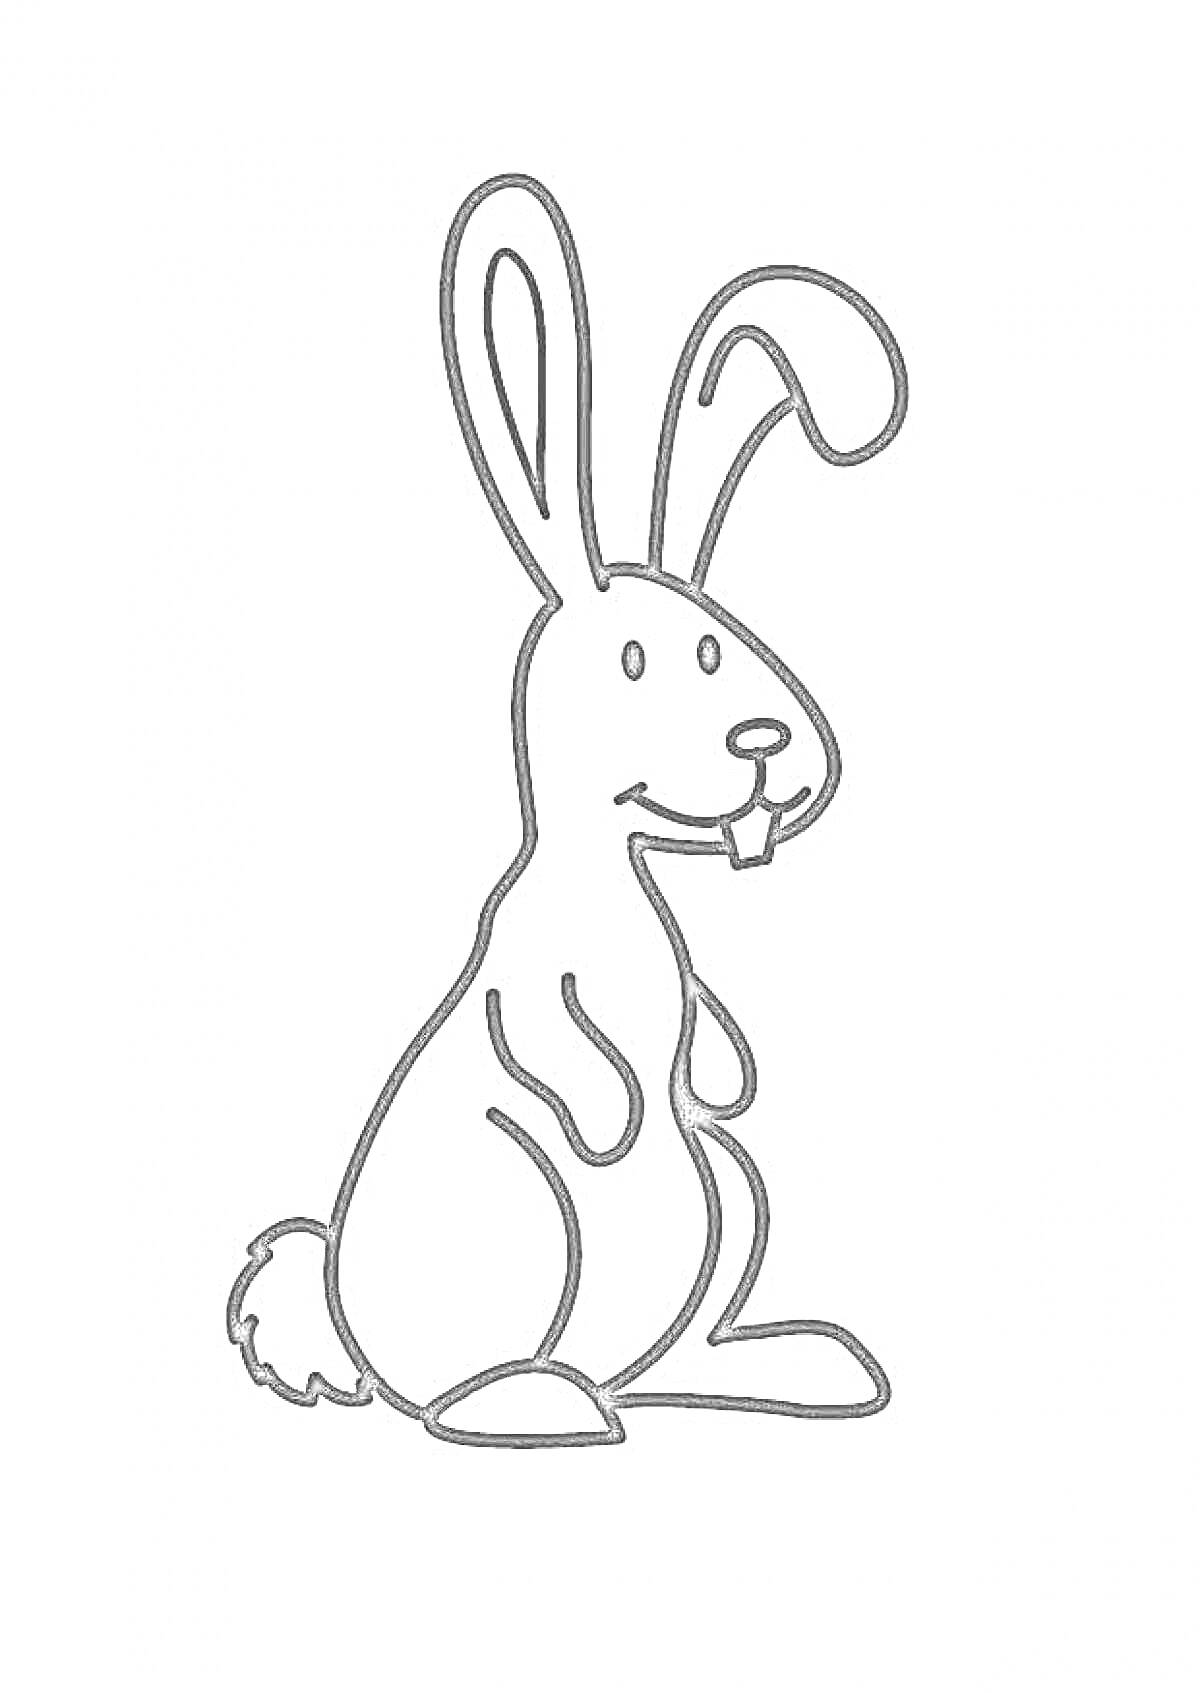 Заяц с большими ушами и передними лапами на животе